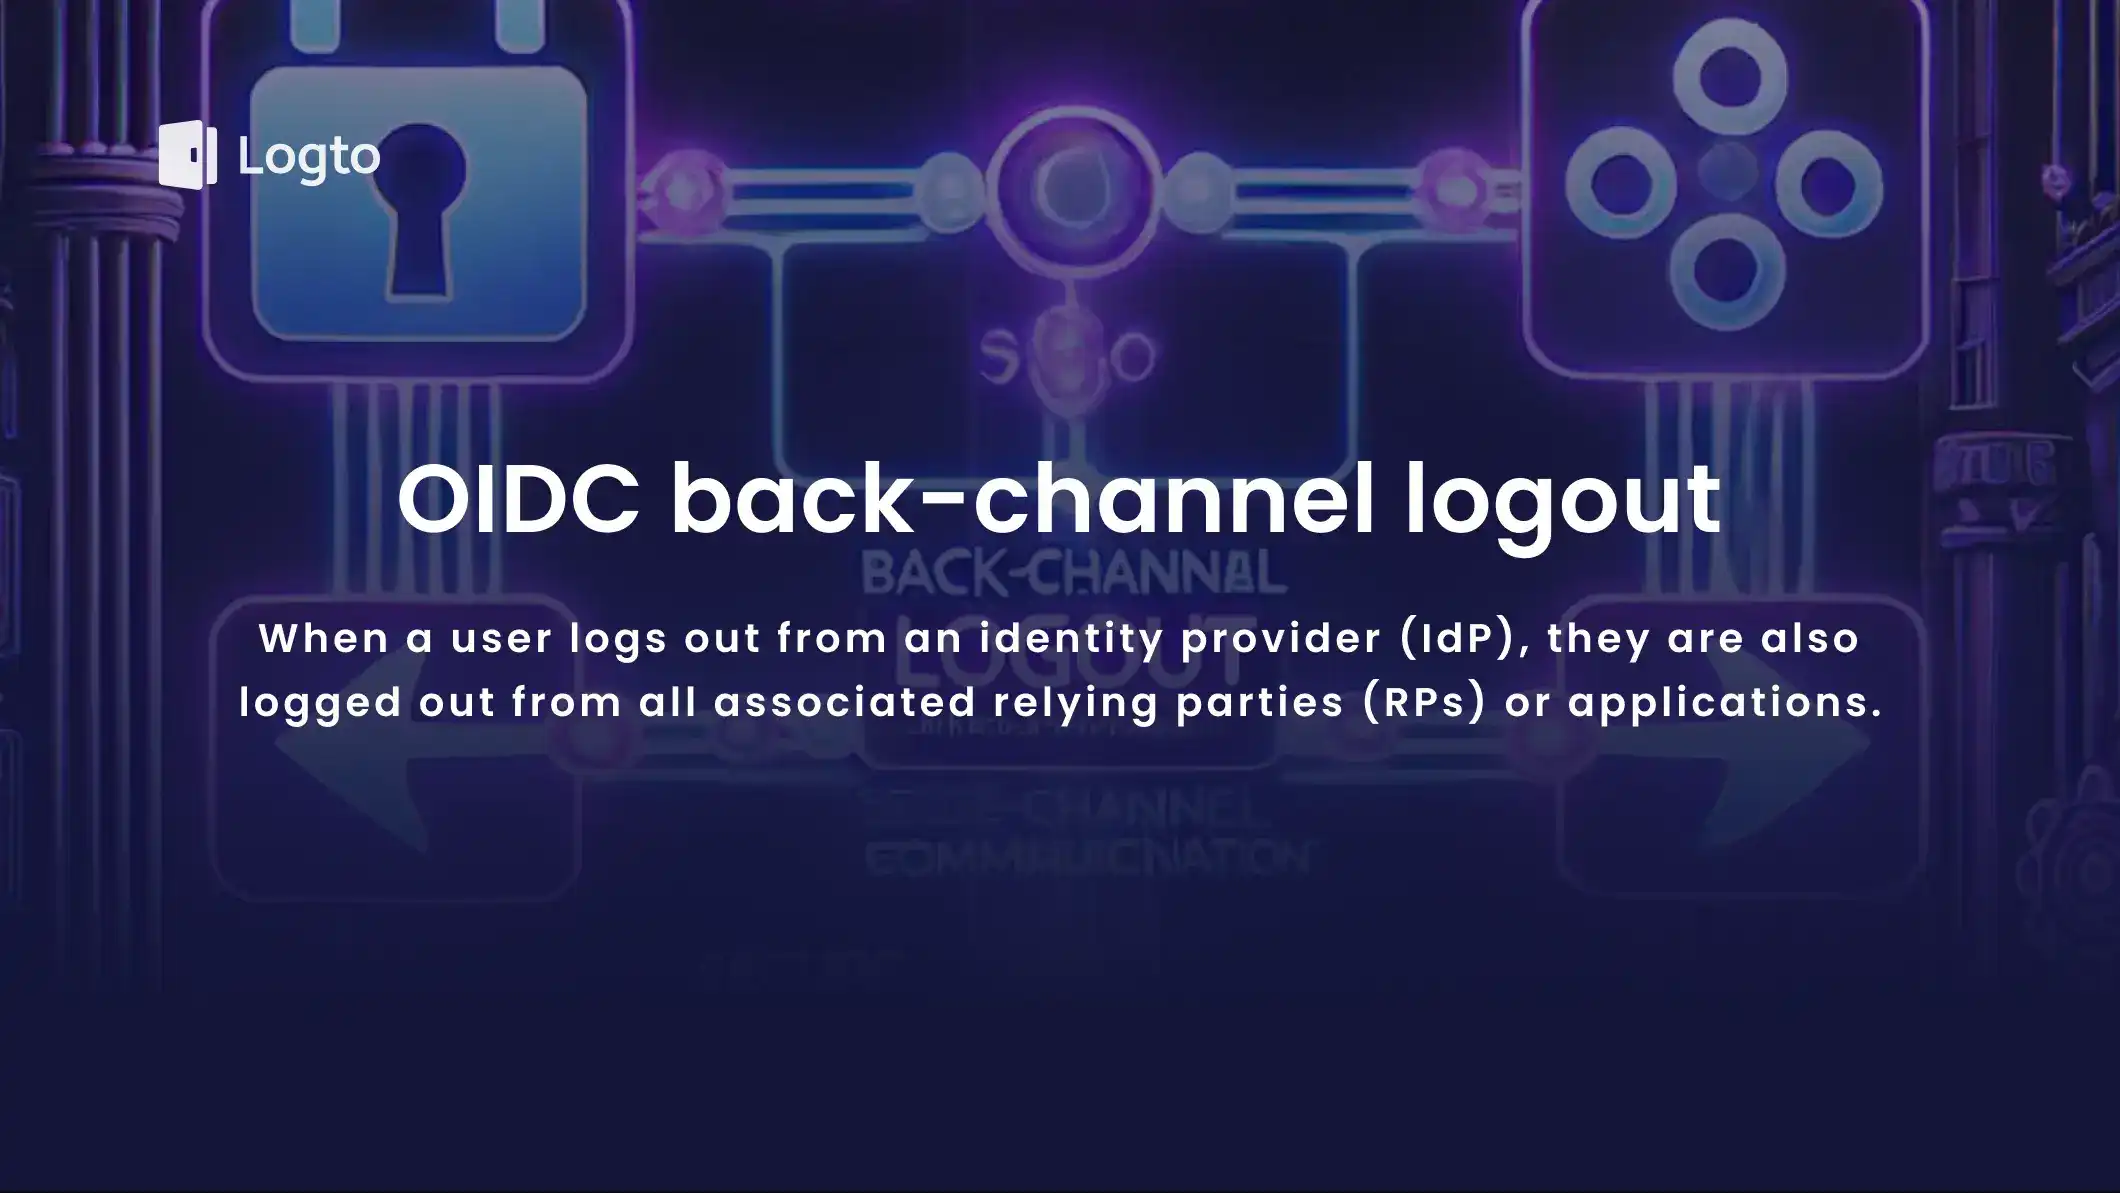 Understanding OIDC back-channel logout